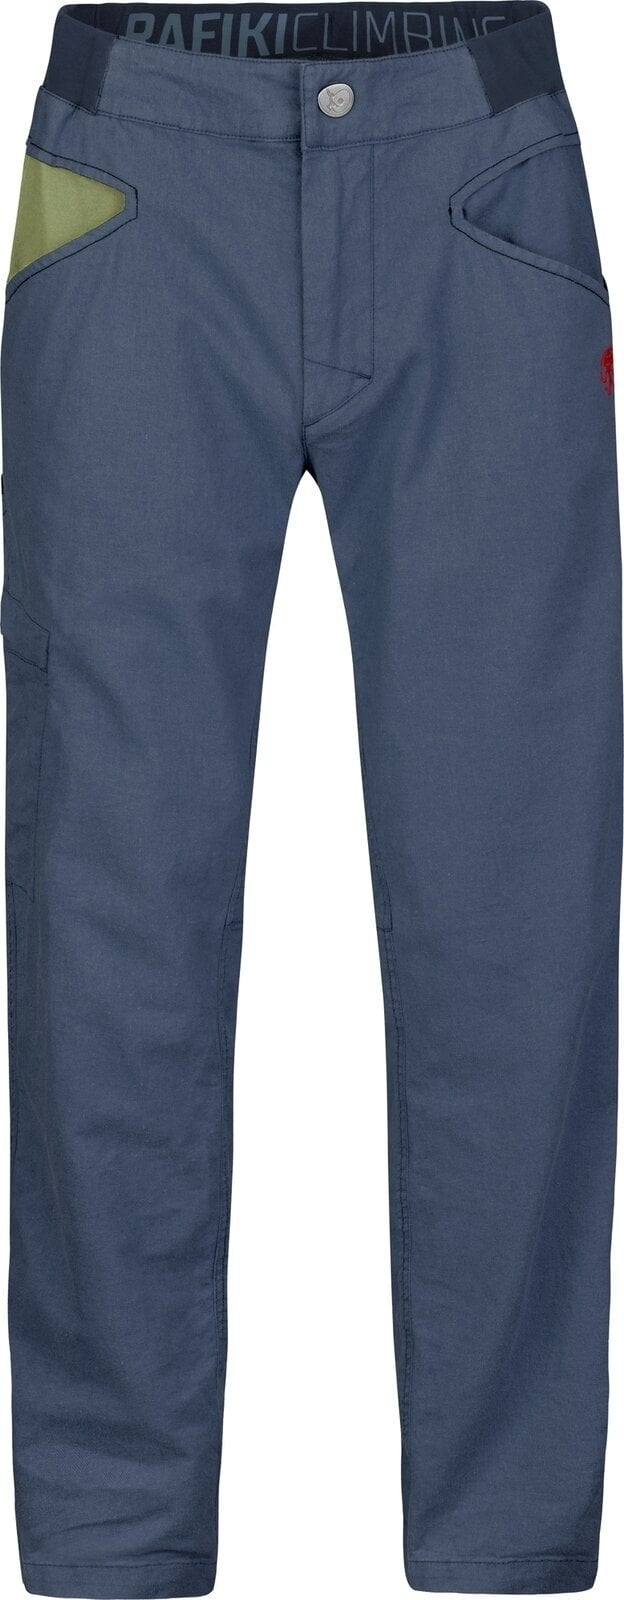 Outdoorhose Rafiki Grip Man Pants India Ink XL Outdoorhose